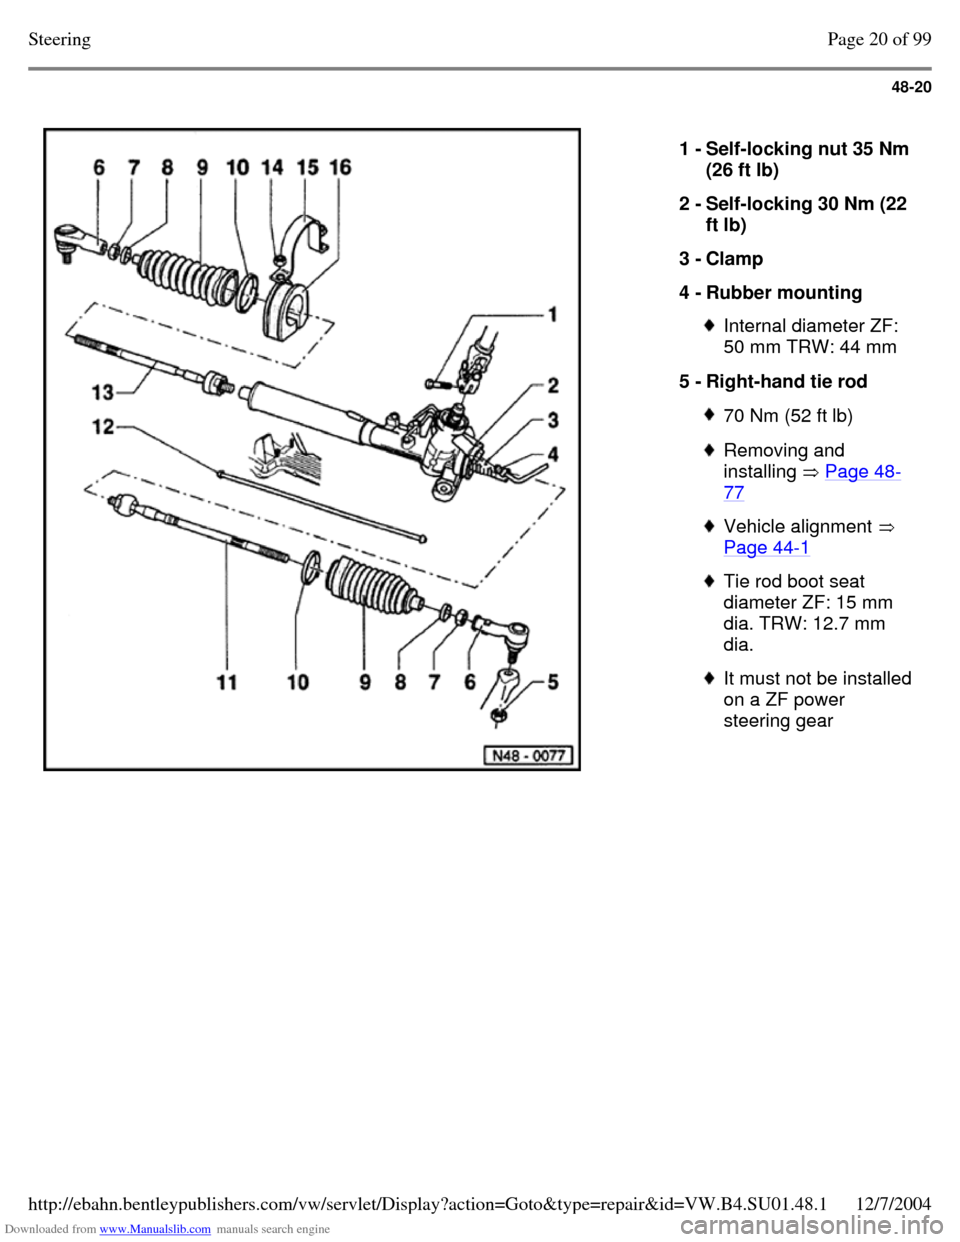 VOLKSWAGEN PASSAT 1996 B3, B4 / 3.G Service Workshop Manual Downloaded from www.Manualslib.com manuals search engine 48-20
   
1 - Self-locking nut 35 Nm 
(26 ft lb) 
2 - Self-locking 30 Nm (22 
ft lb) 
3 - Clamp 
4 - Rubber mounting  Internal diameter ZF: 
50